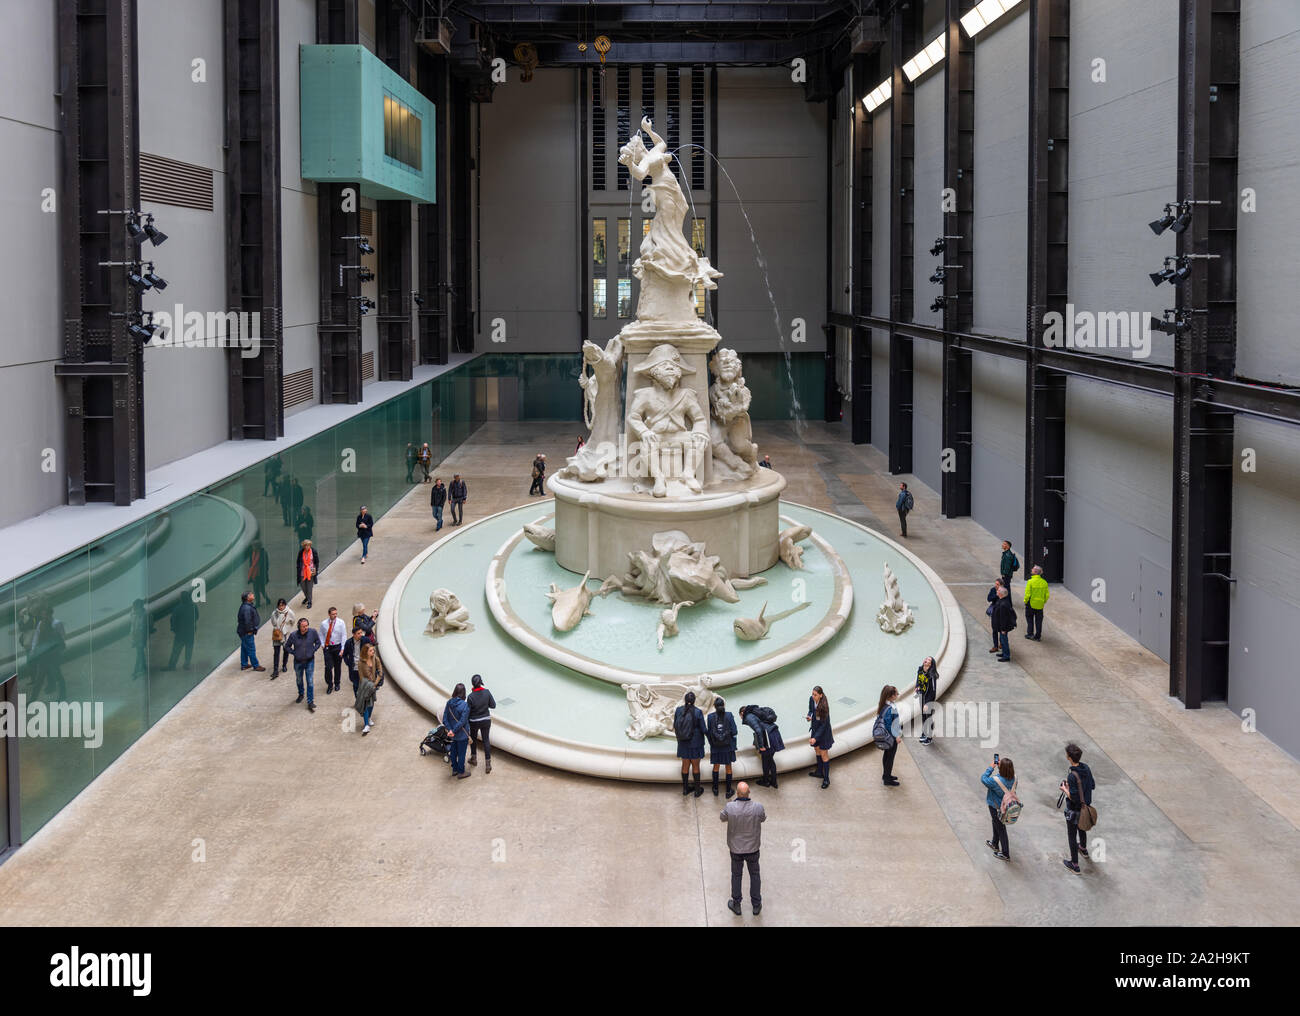 Fons Americanus Fountain, por Kara Walker, sala de turbinas, Tate Modern, Bankside, London. Inspirado por la Victoria Memorial delante del Palacio de Buckingham Foto de stock